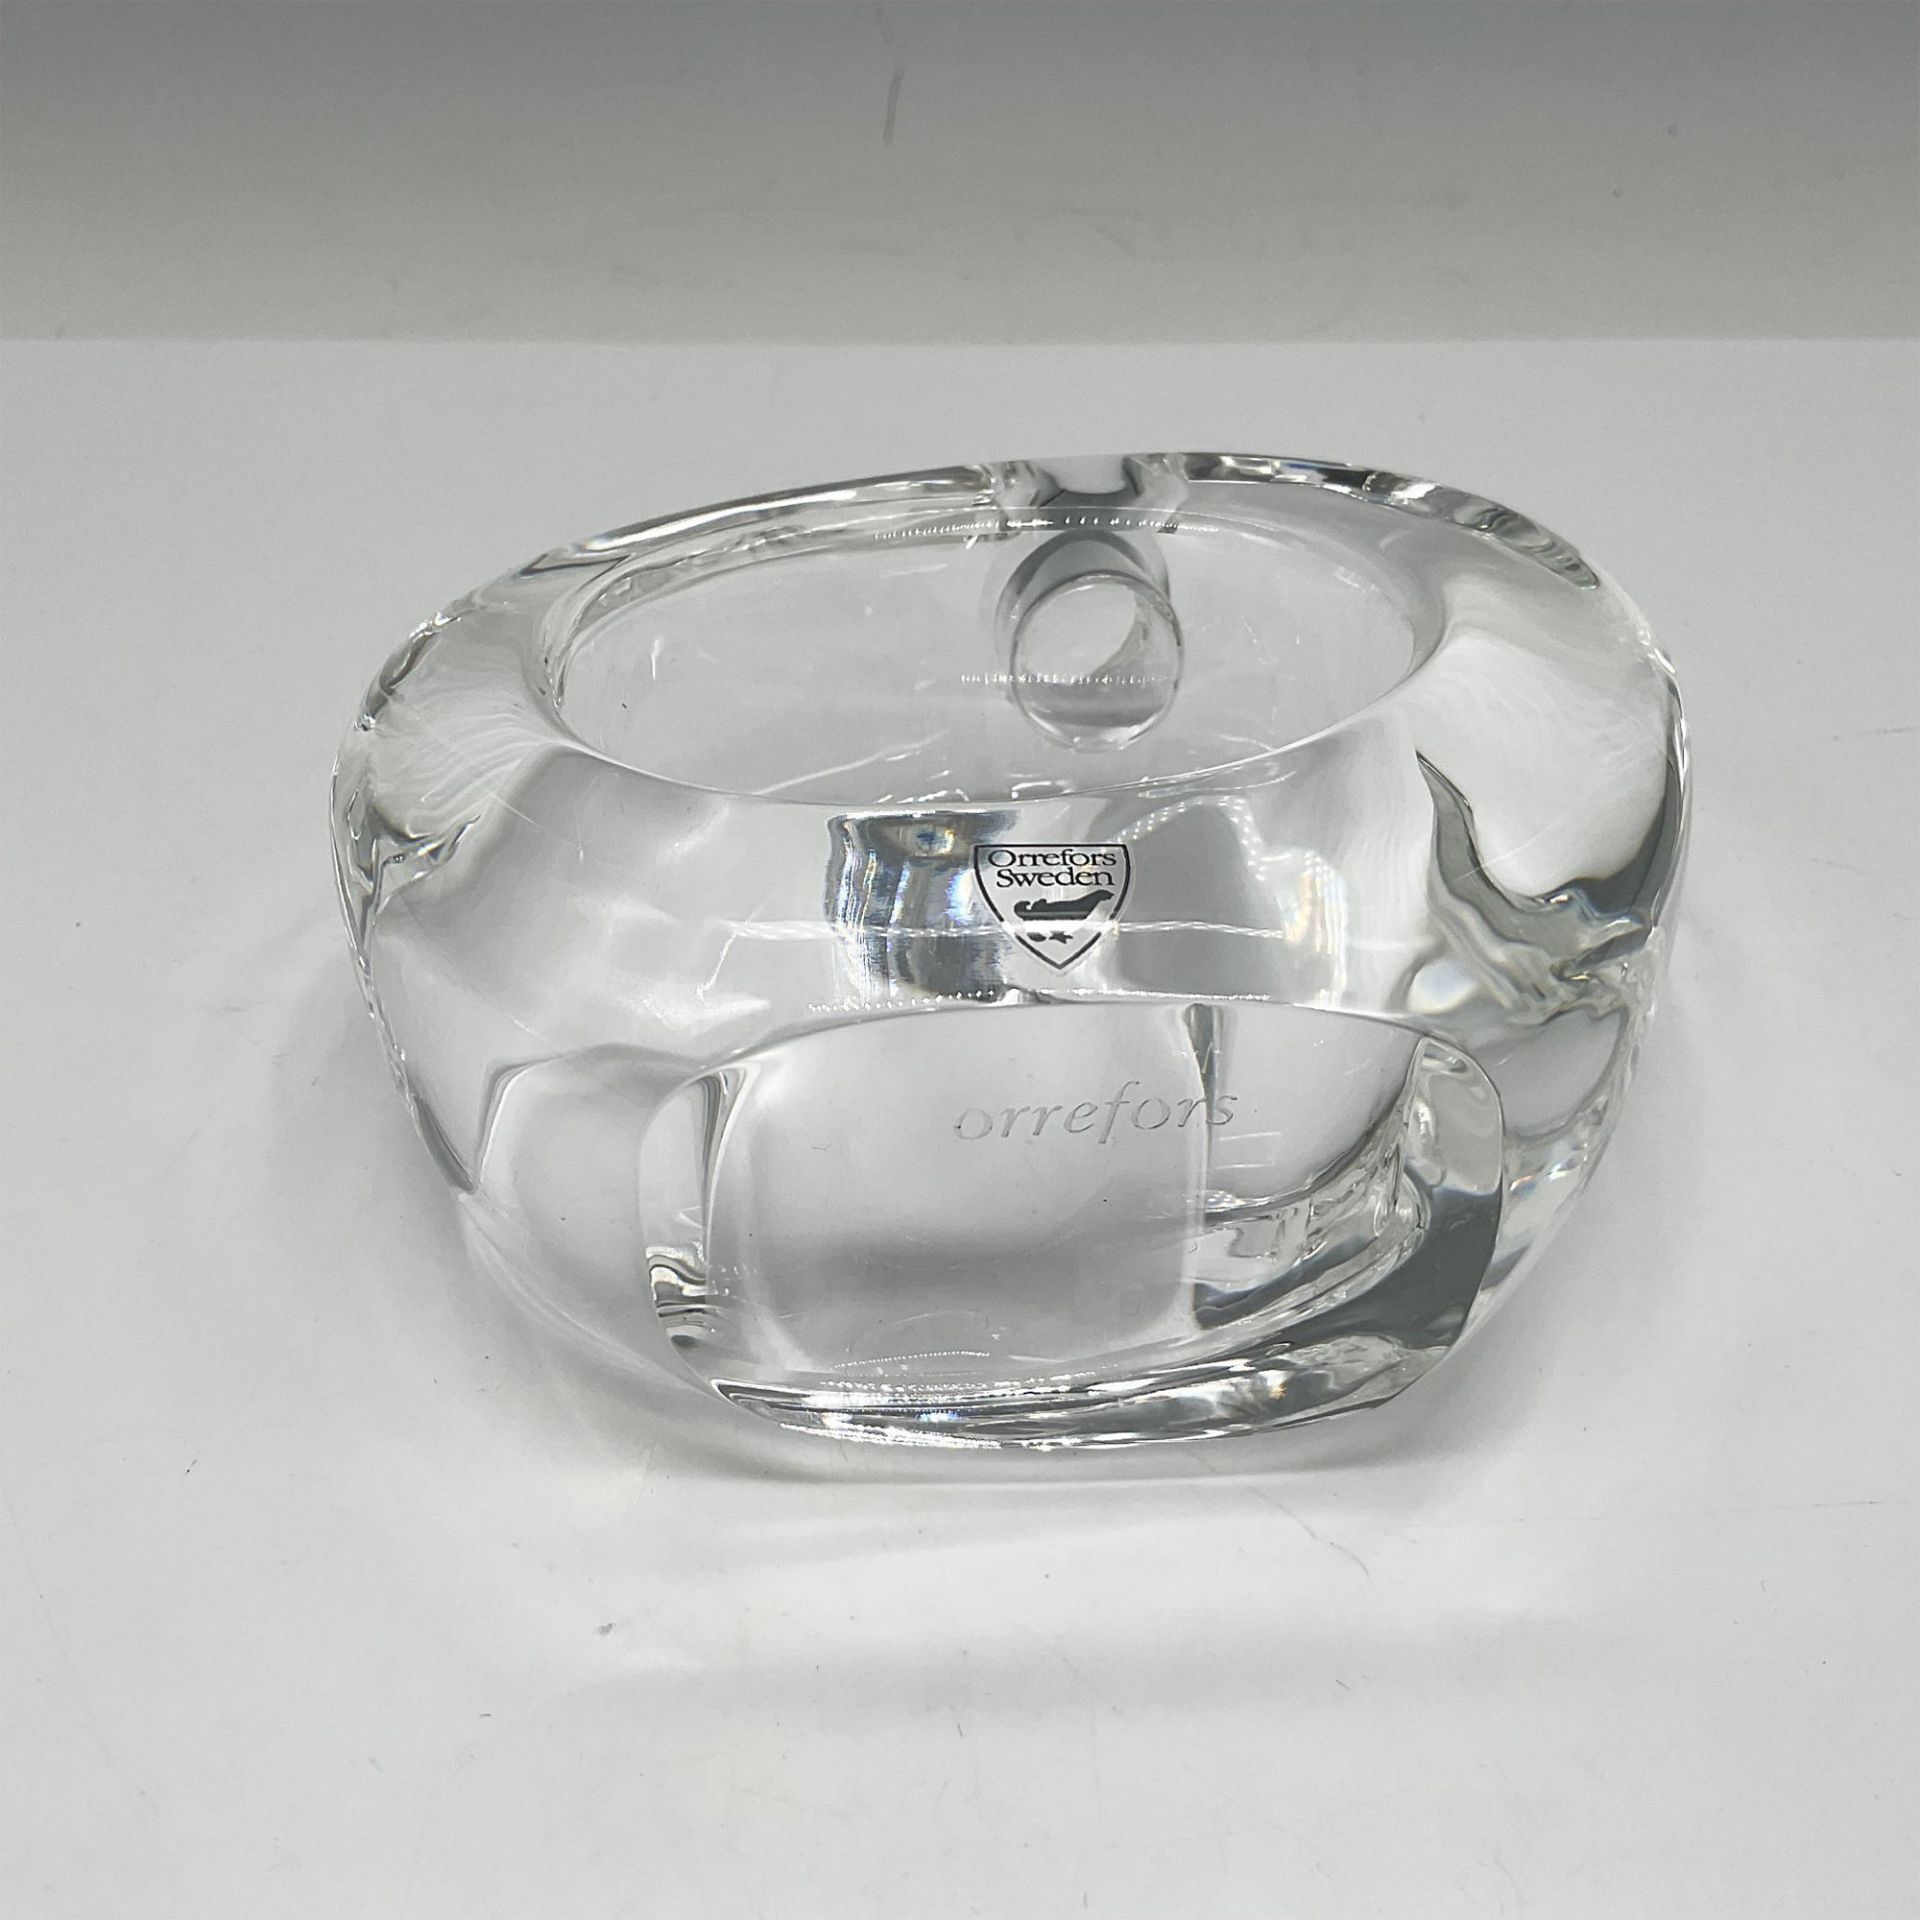 Orrefors Crystal Oval Candle Holder - Image 4 of 5